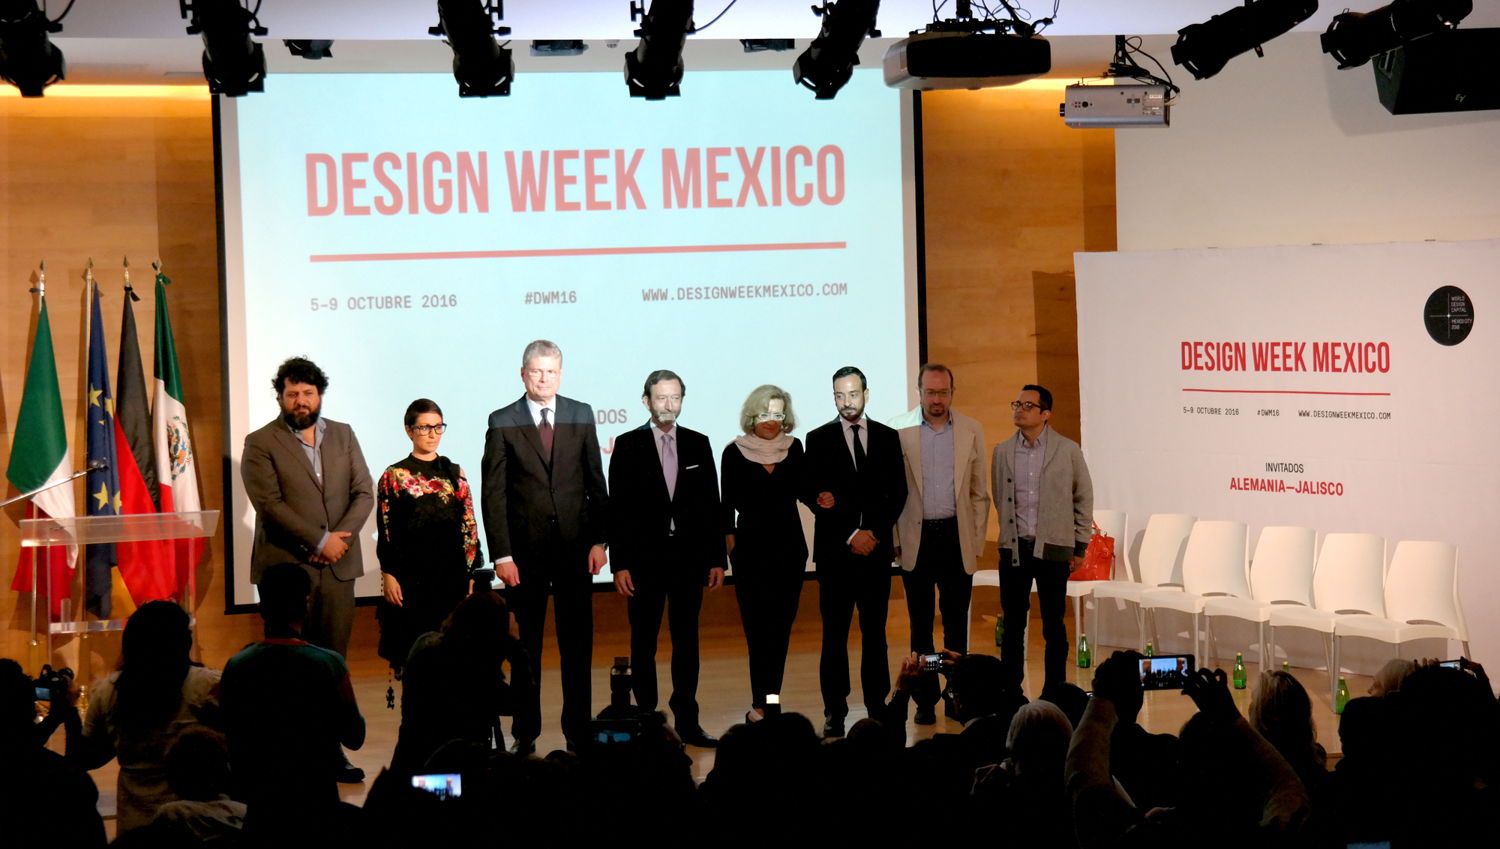 Design Week Mexico 2016